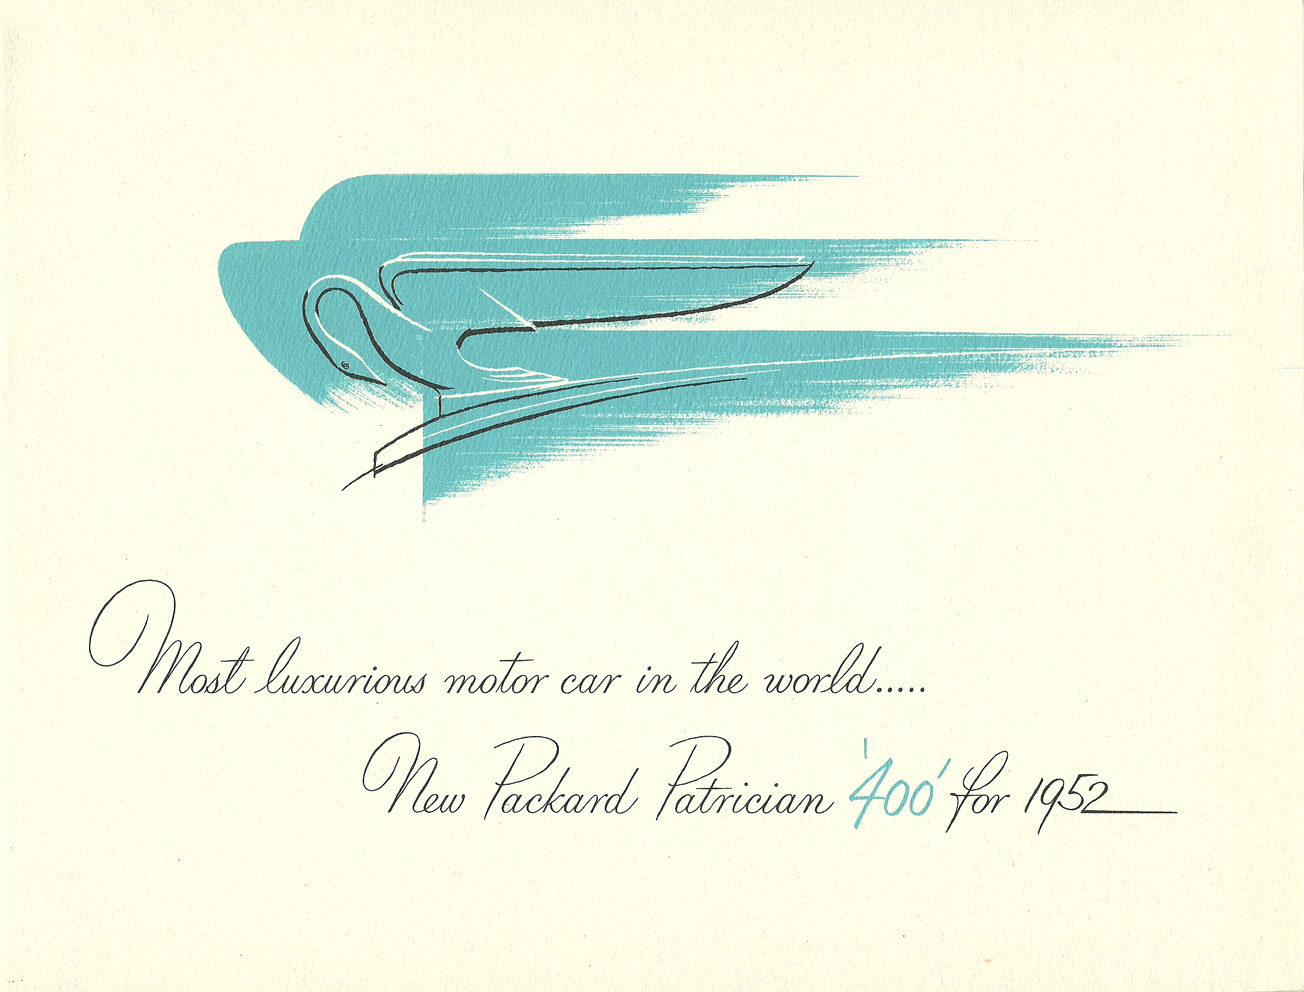 1952_Packard_Patrician_400_Folder-01